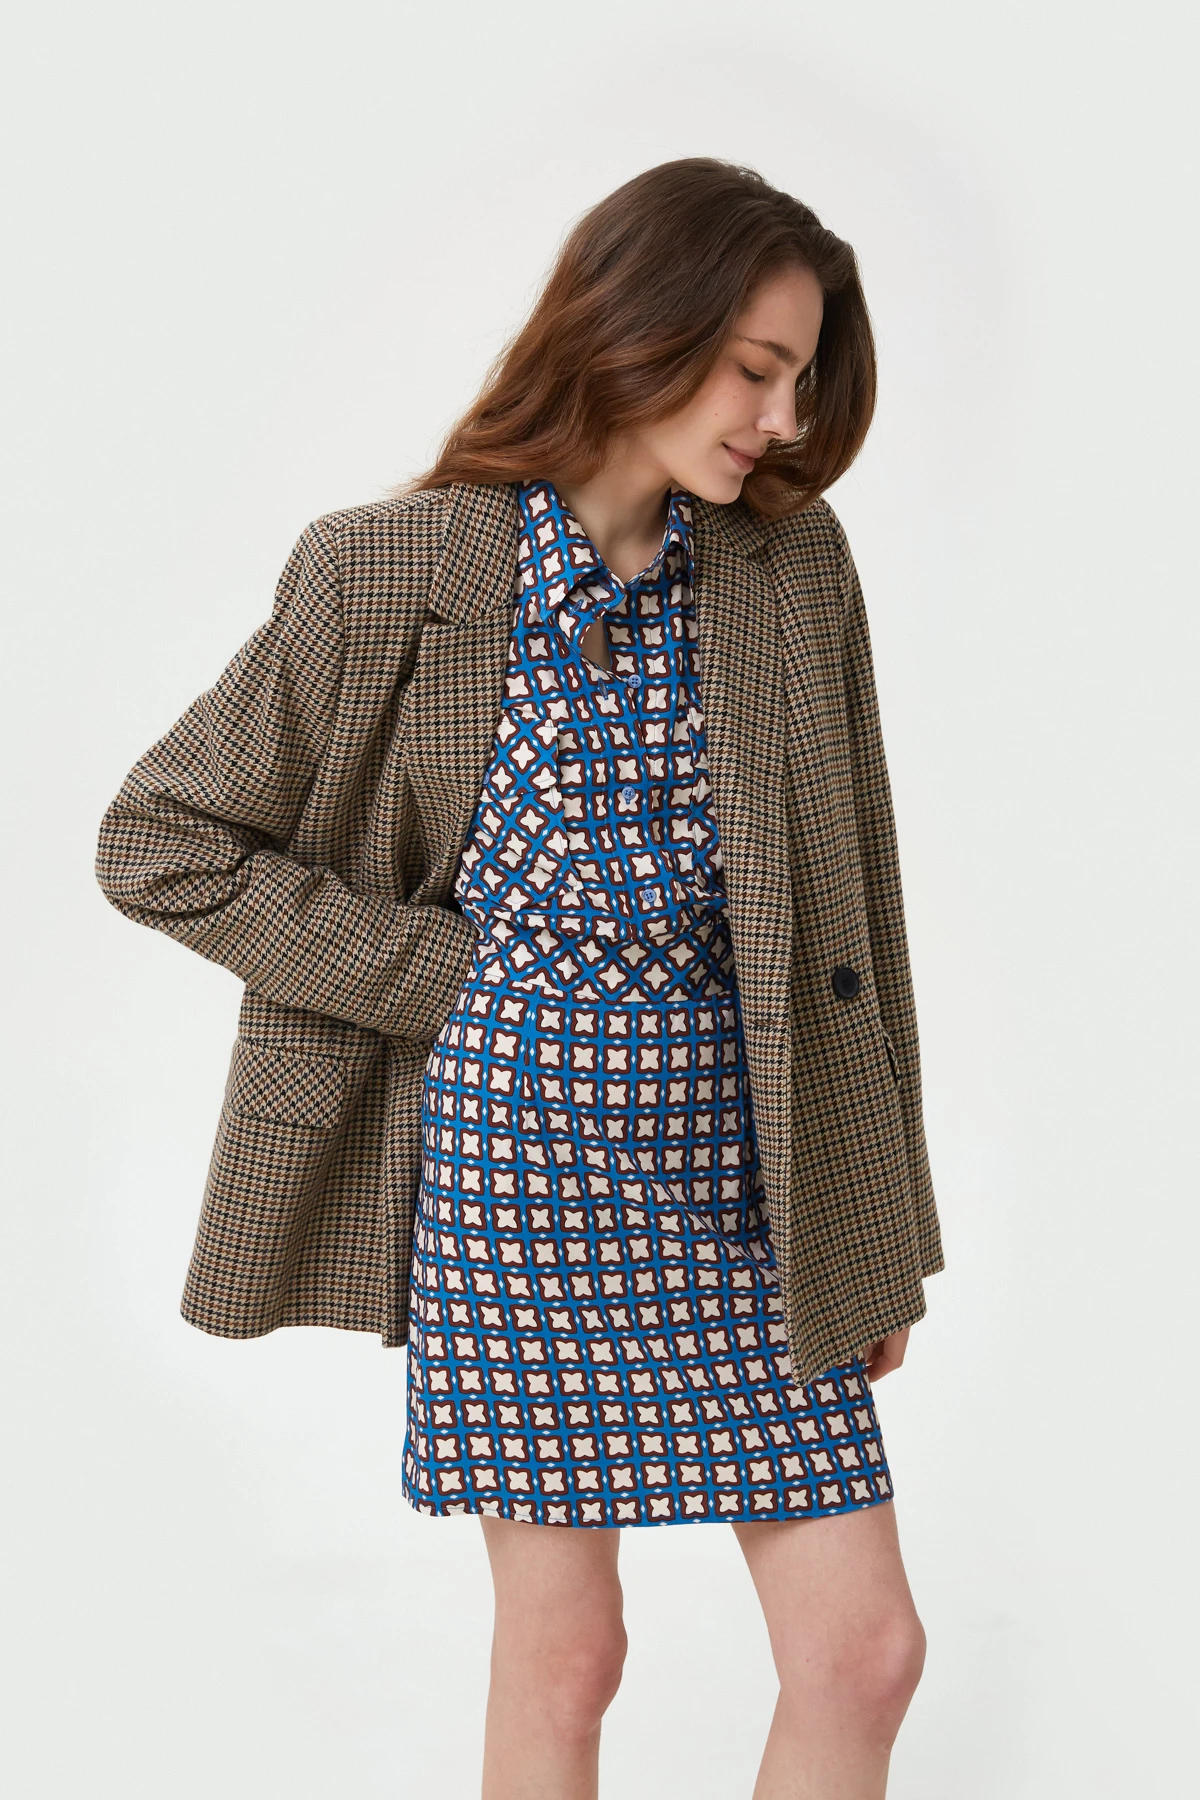 Blue short tencel dress with shirt collar in geometric print, photo 4